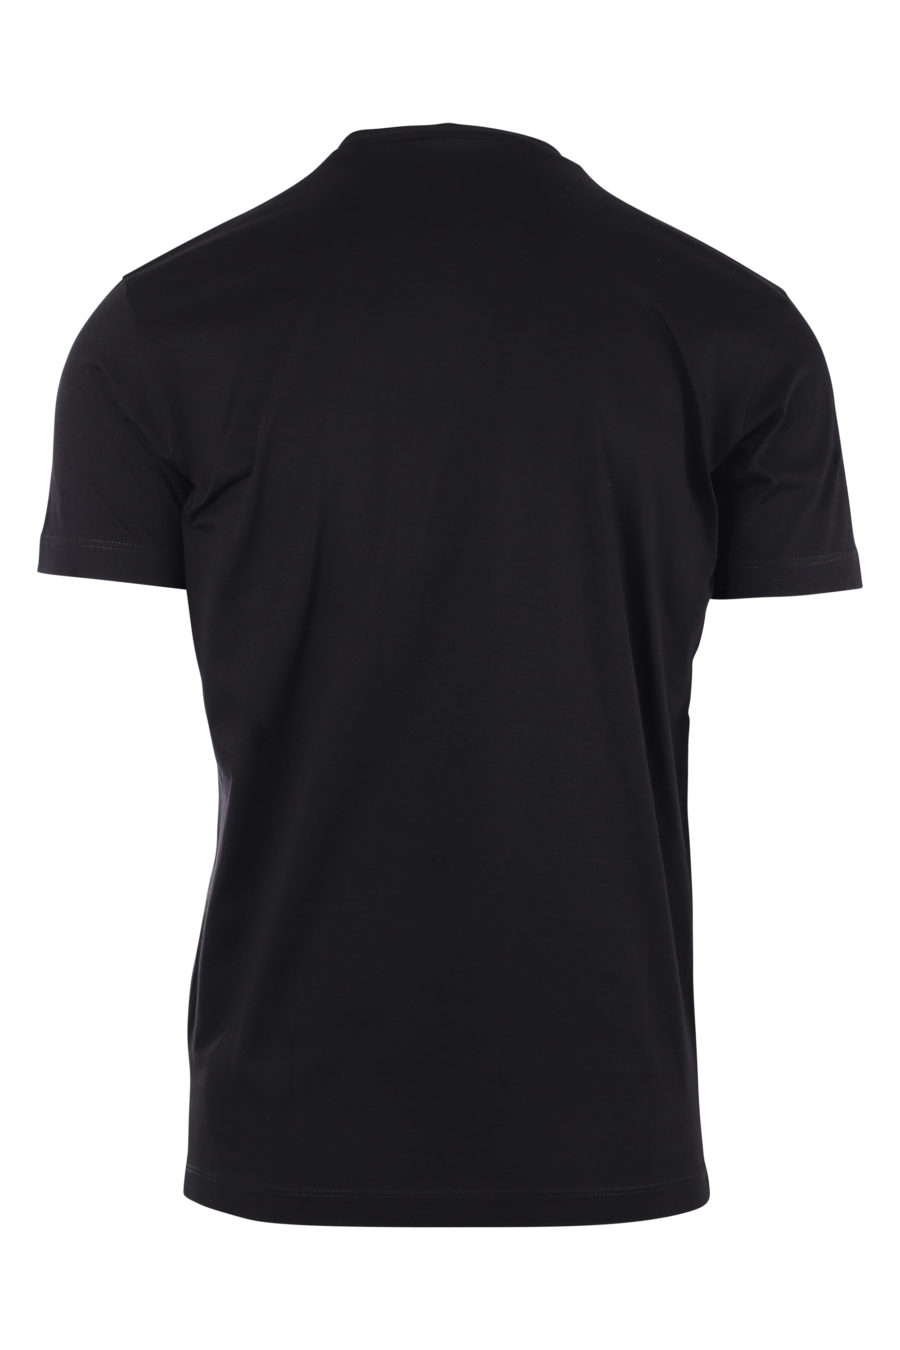 T-shirt preta com logótipo ceresio 9 - IMG 9728